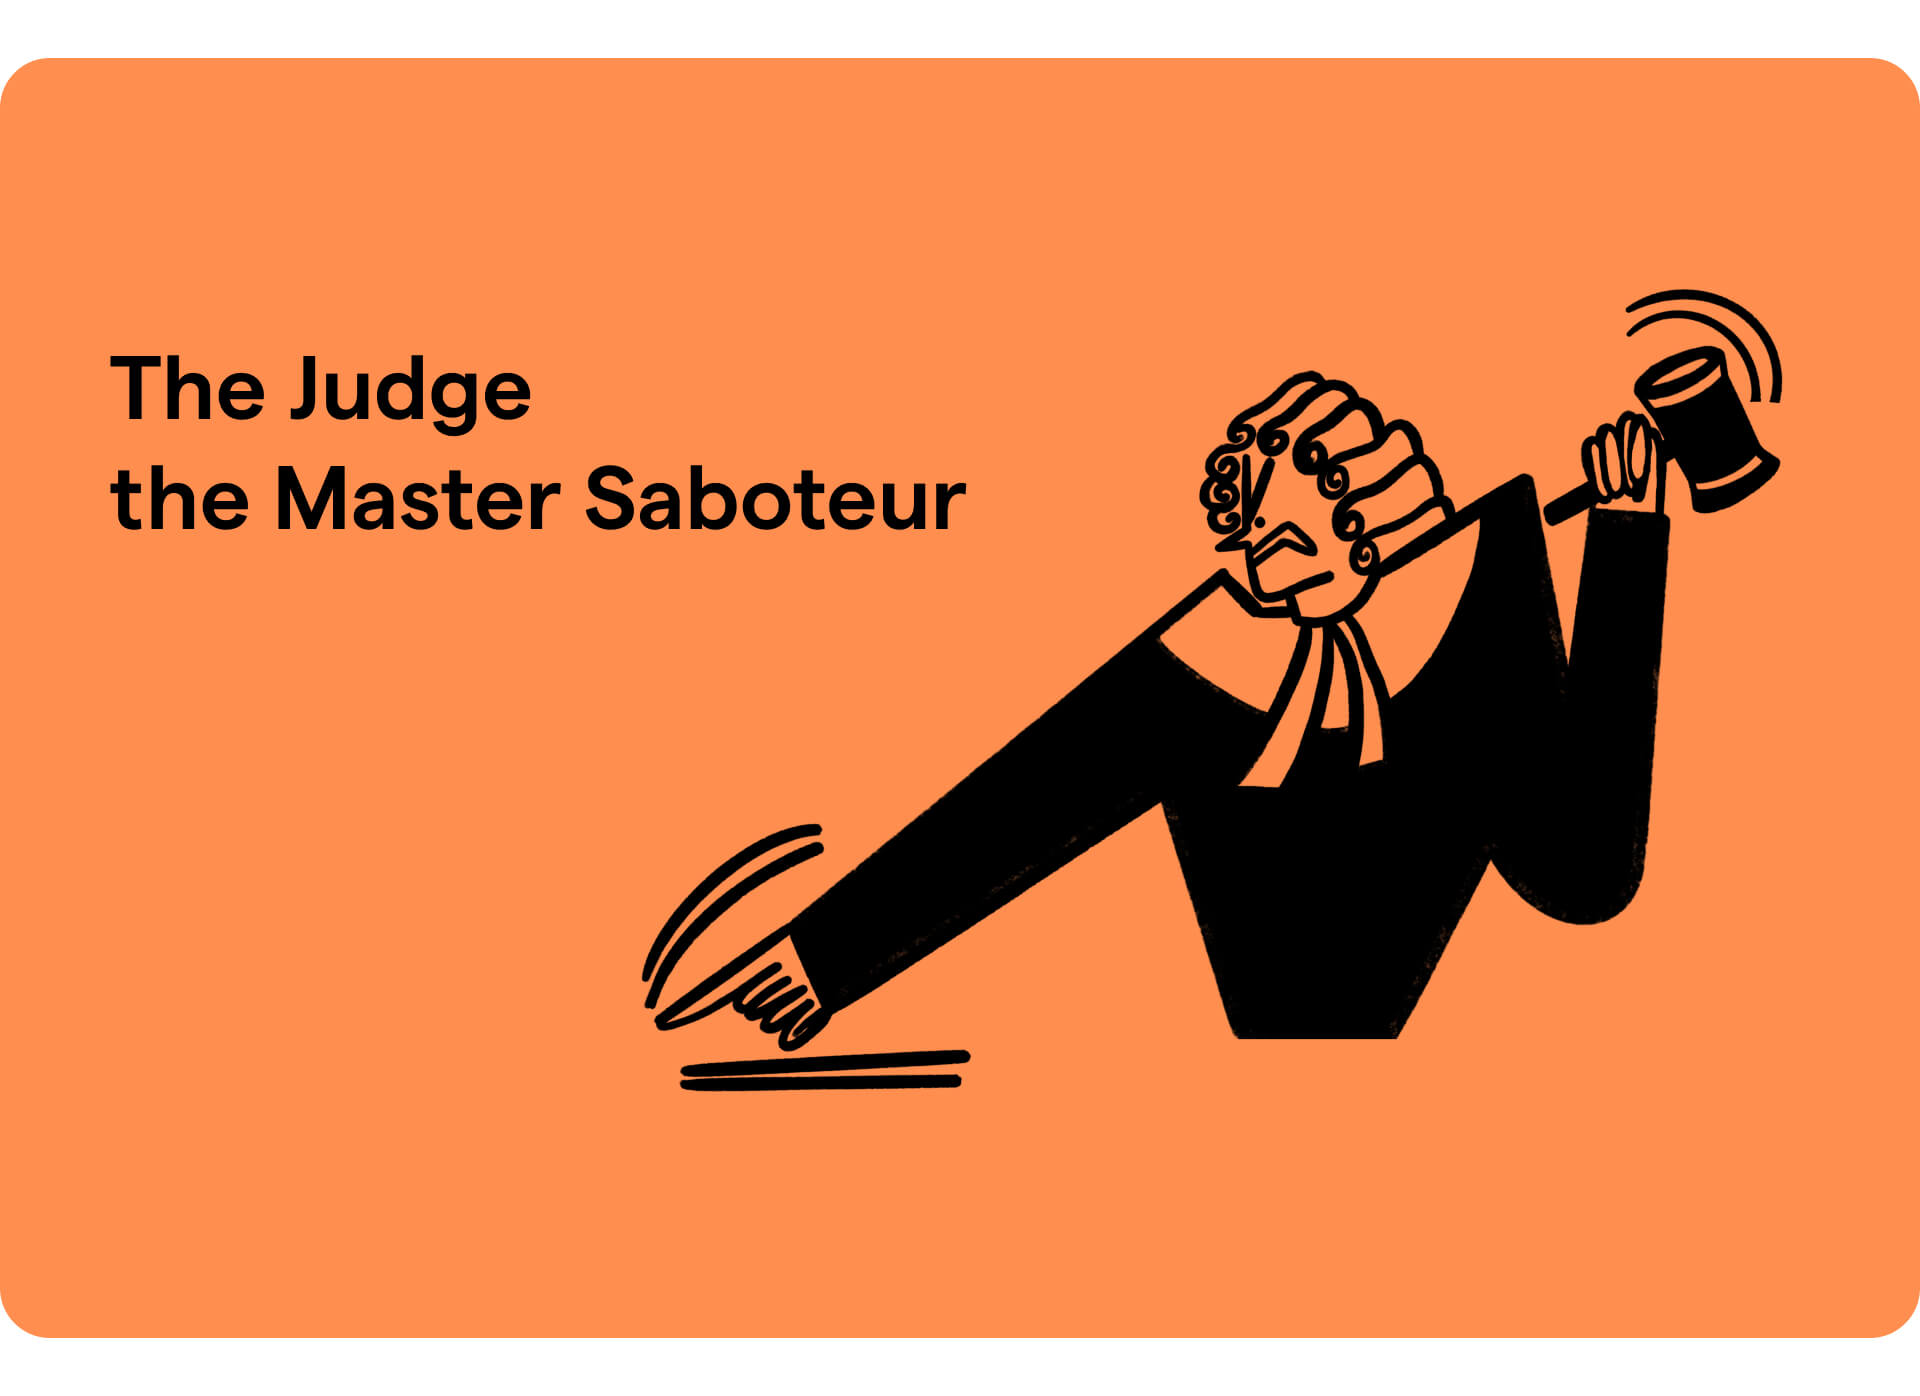 the Judge the master Saboteur